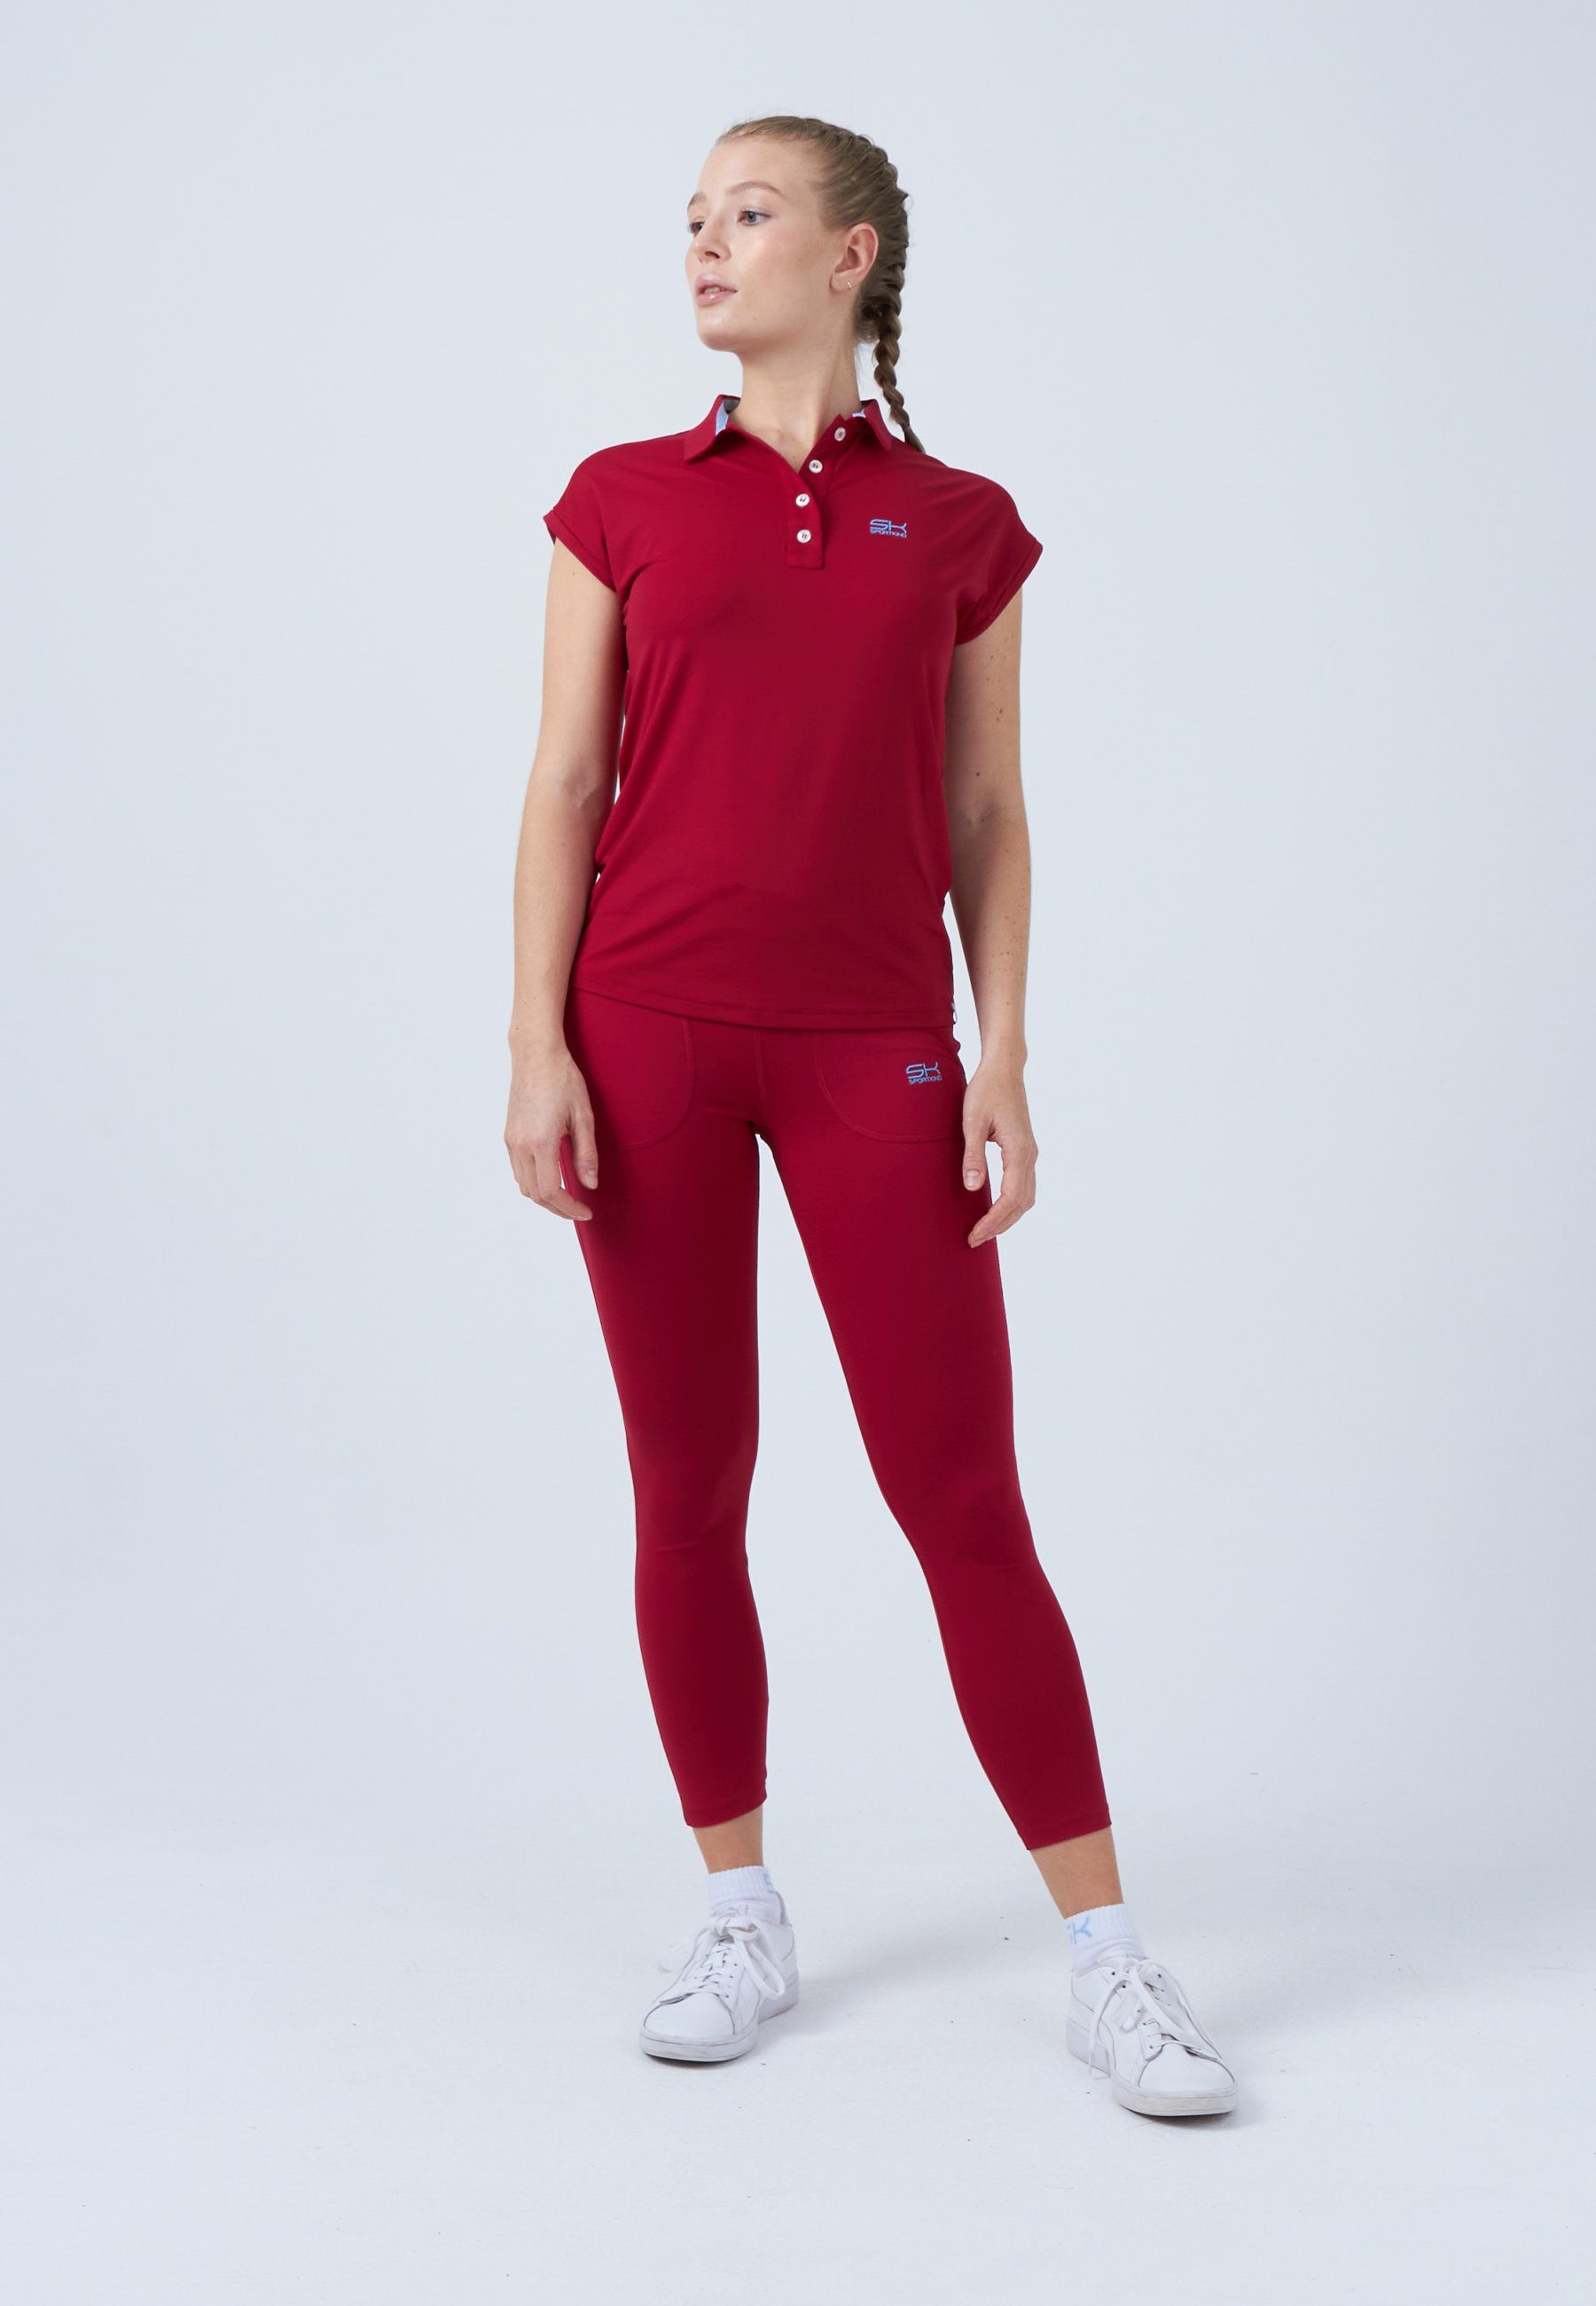 Polo Loose-Fit rot SPORTKIND Mädchen & Funktionsshirt Damen Shirt Golf bordeaux